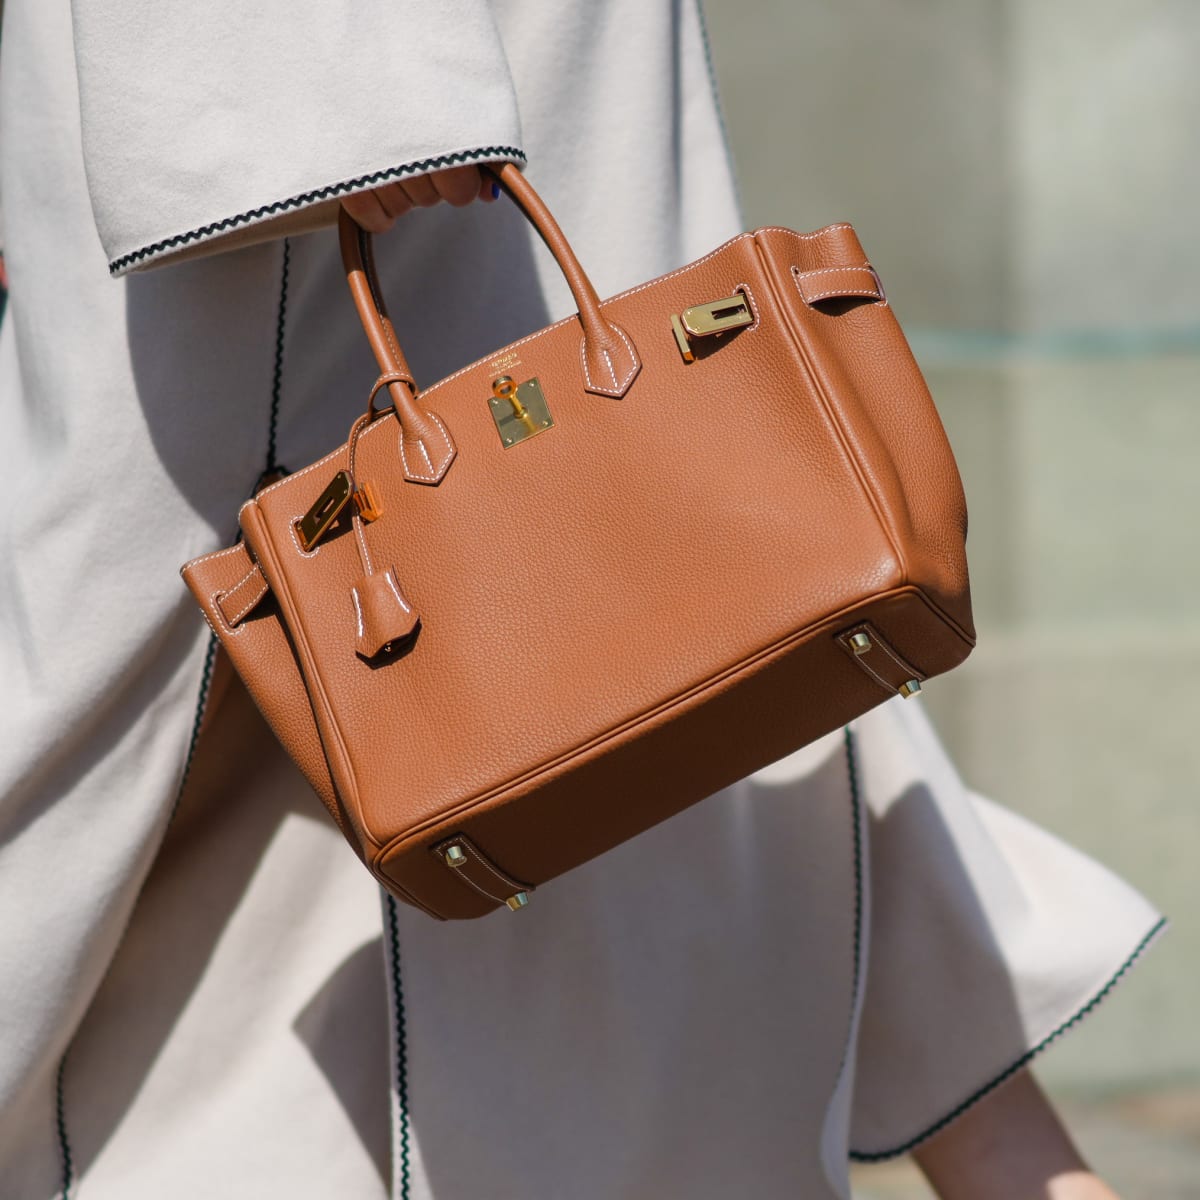 Luxury Designer Bag Investment Series: Hermès Birkin Bag Review - History,  Prices 2020 • Save. Spend. Splurge.